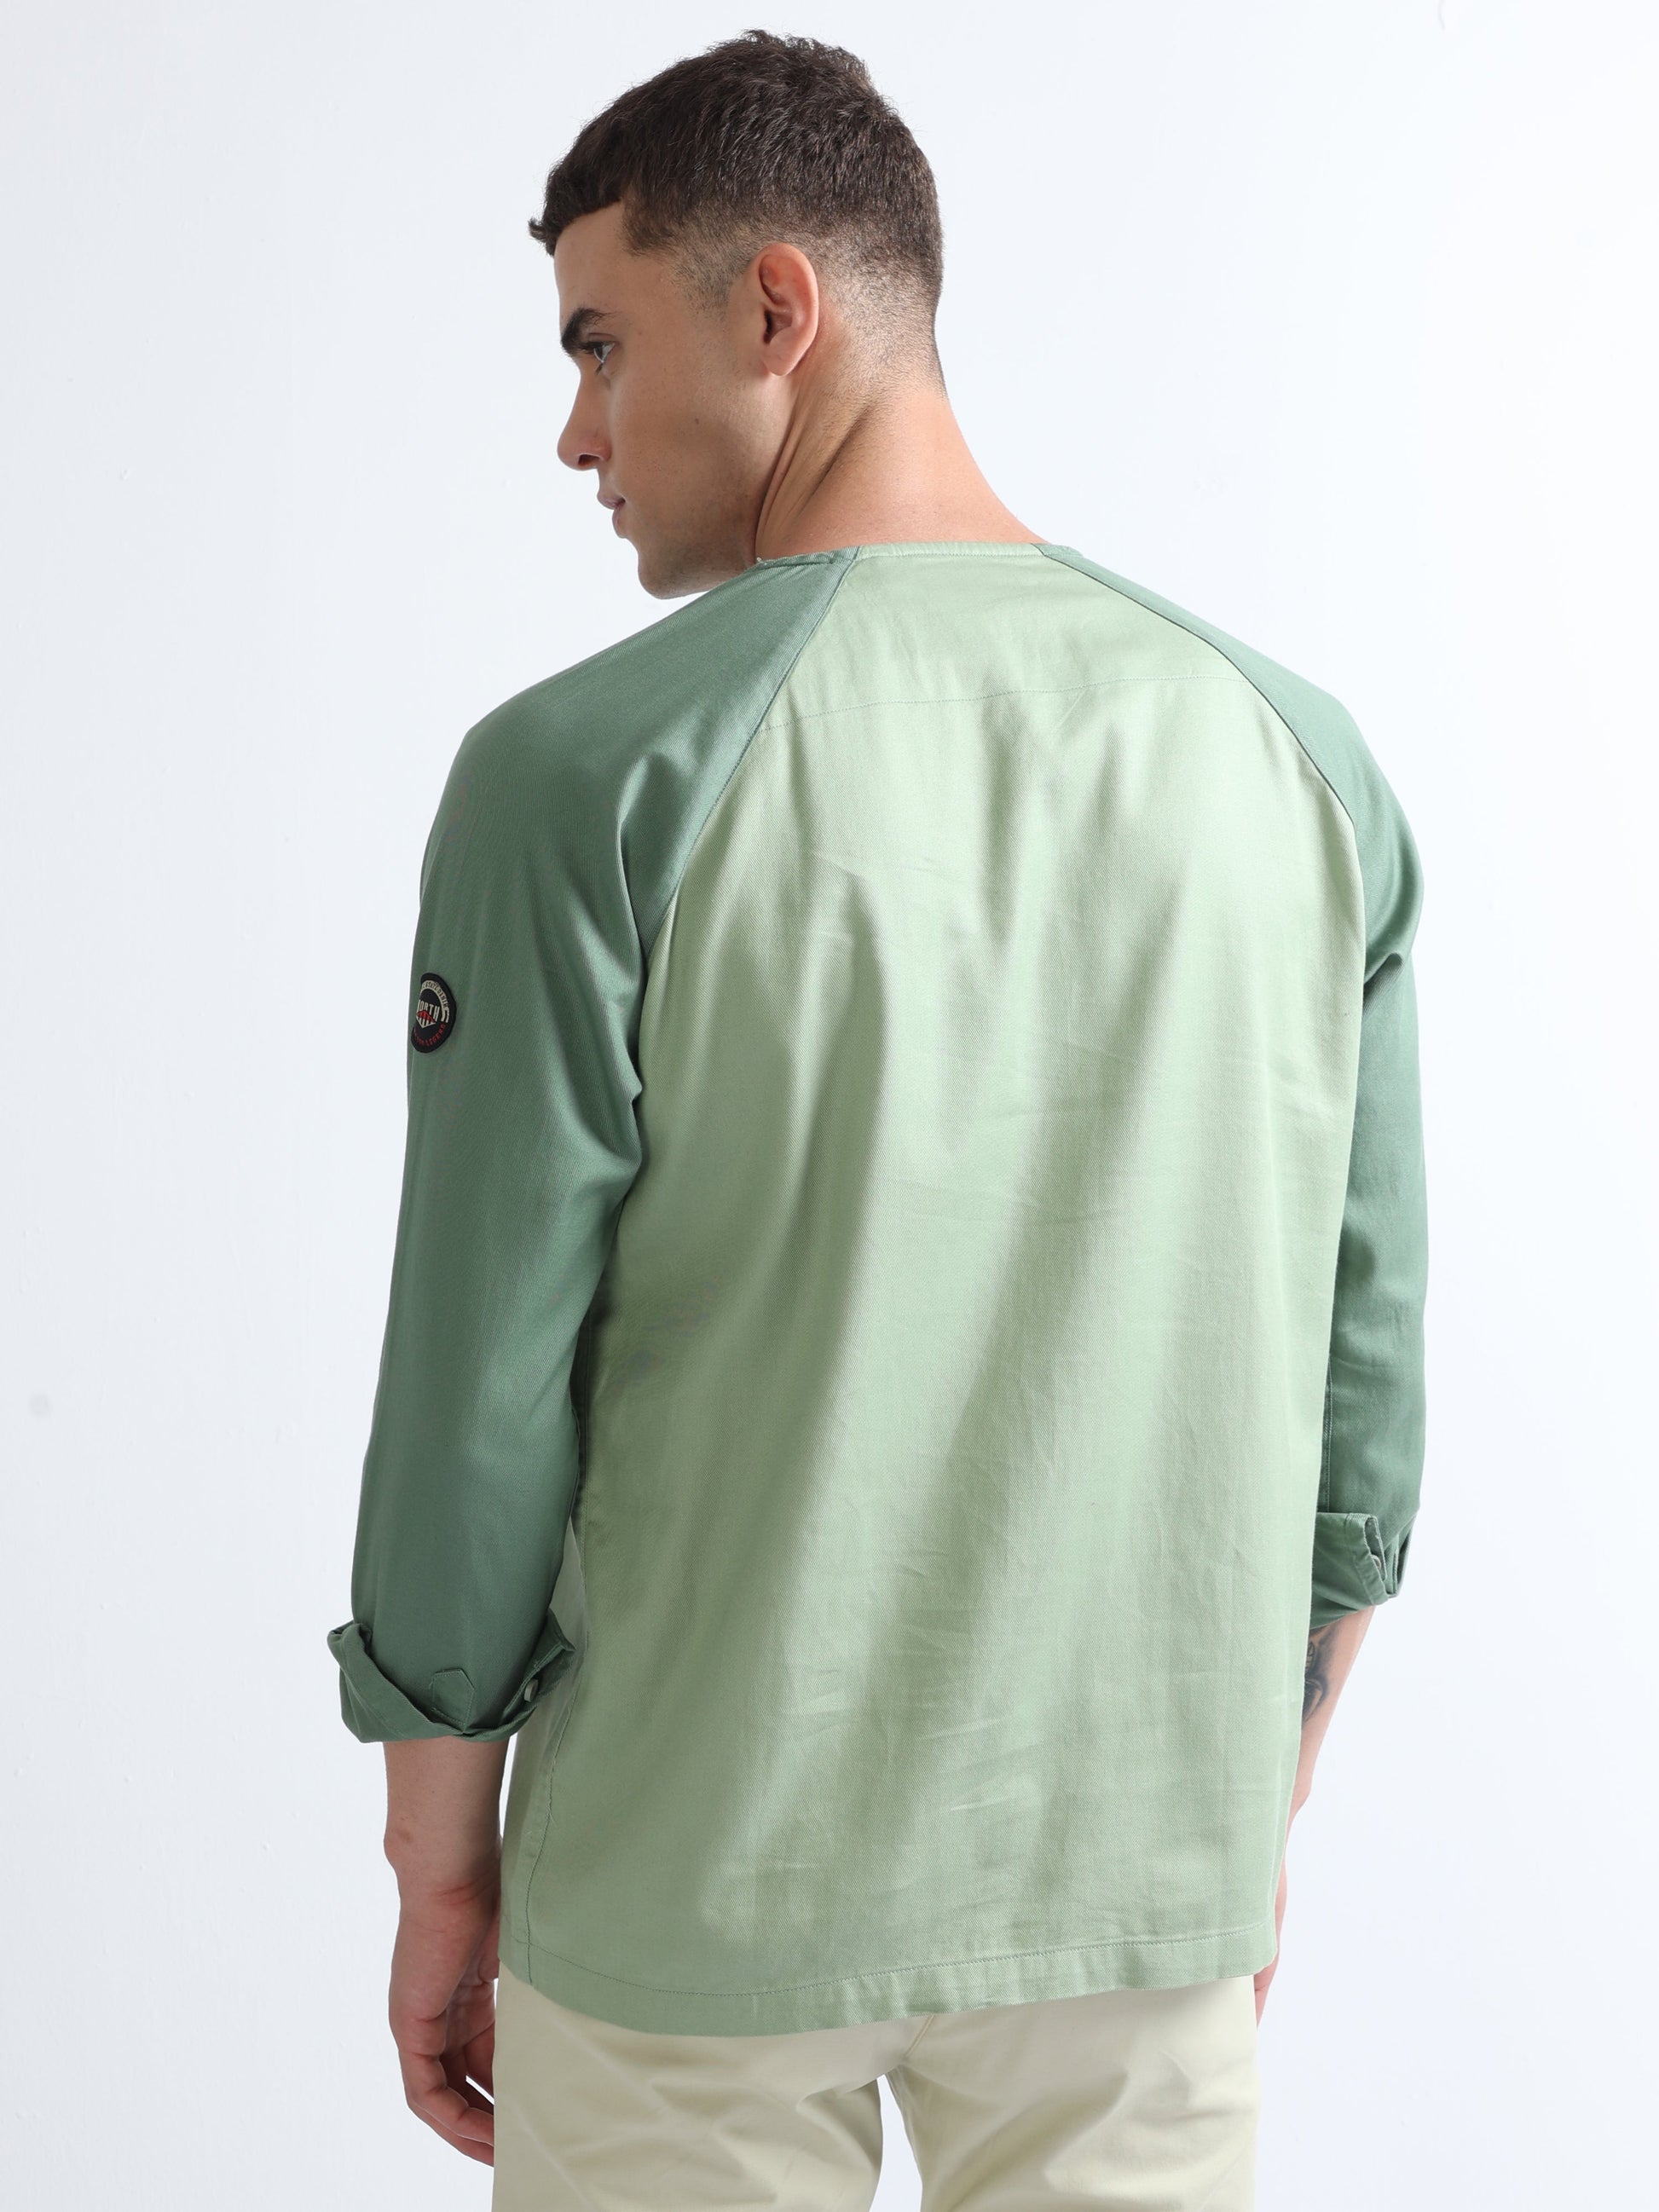 Buy Raglan Full Sleeves Panel Shirt Online.